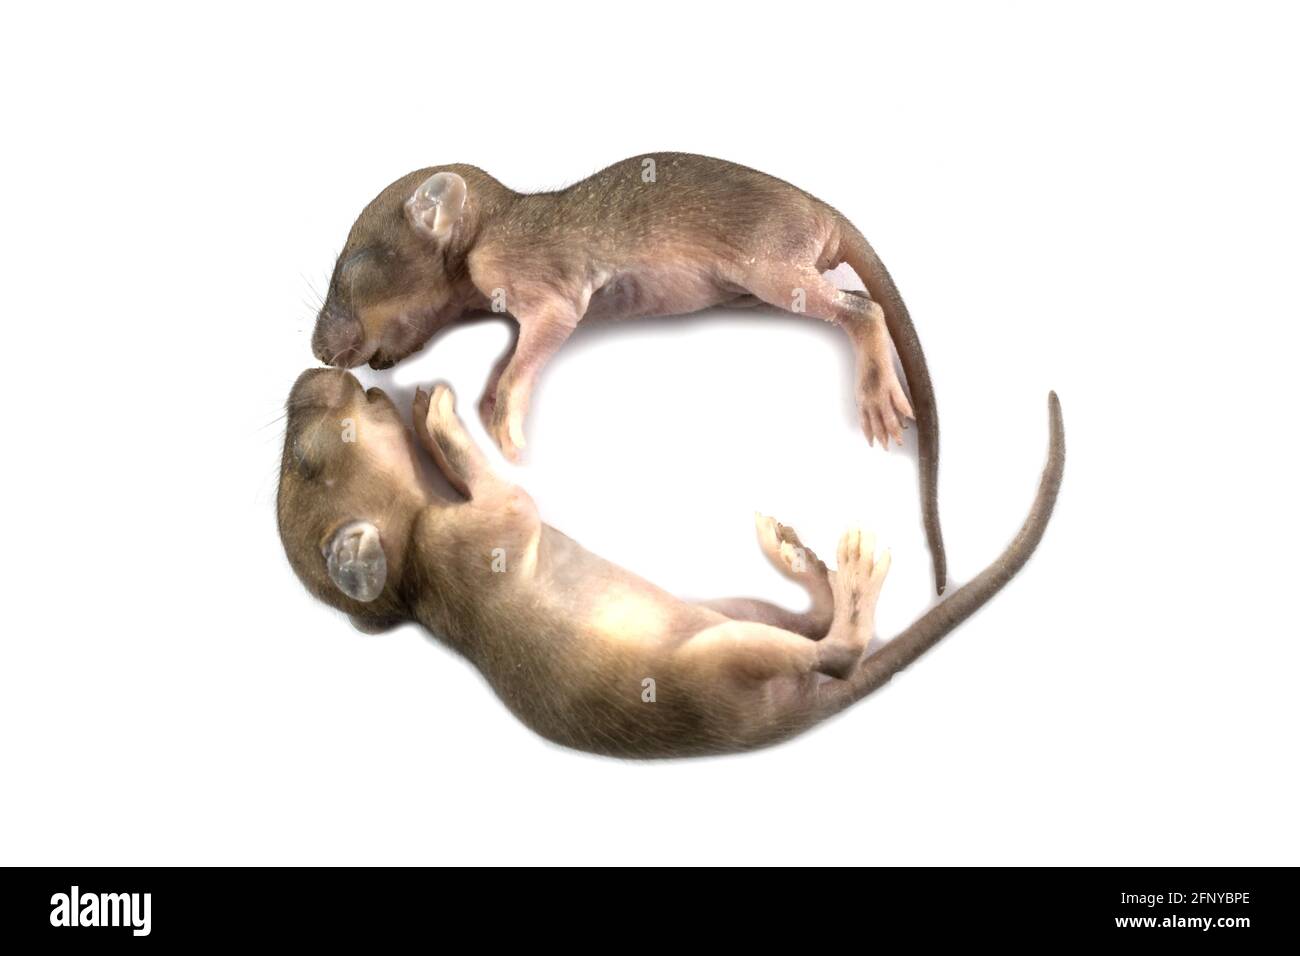 Baby rats on white background Stock Photo